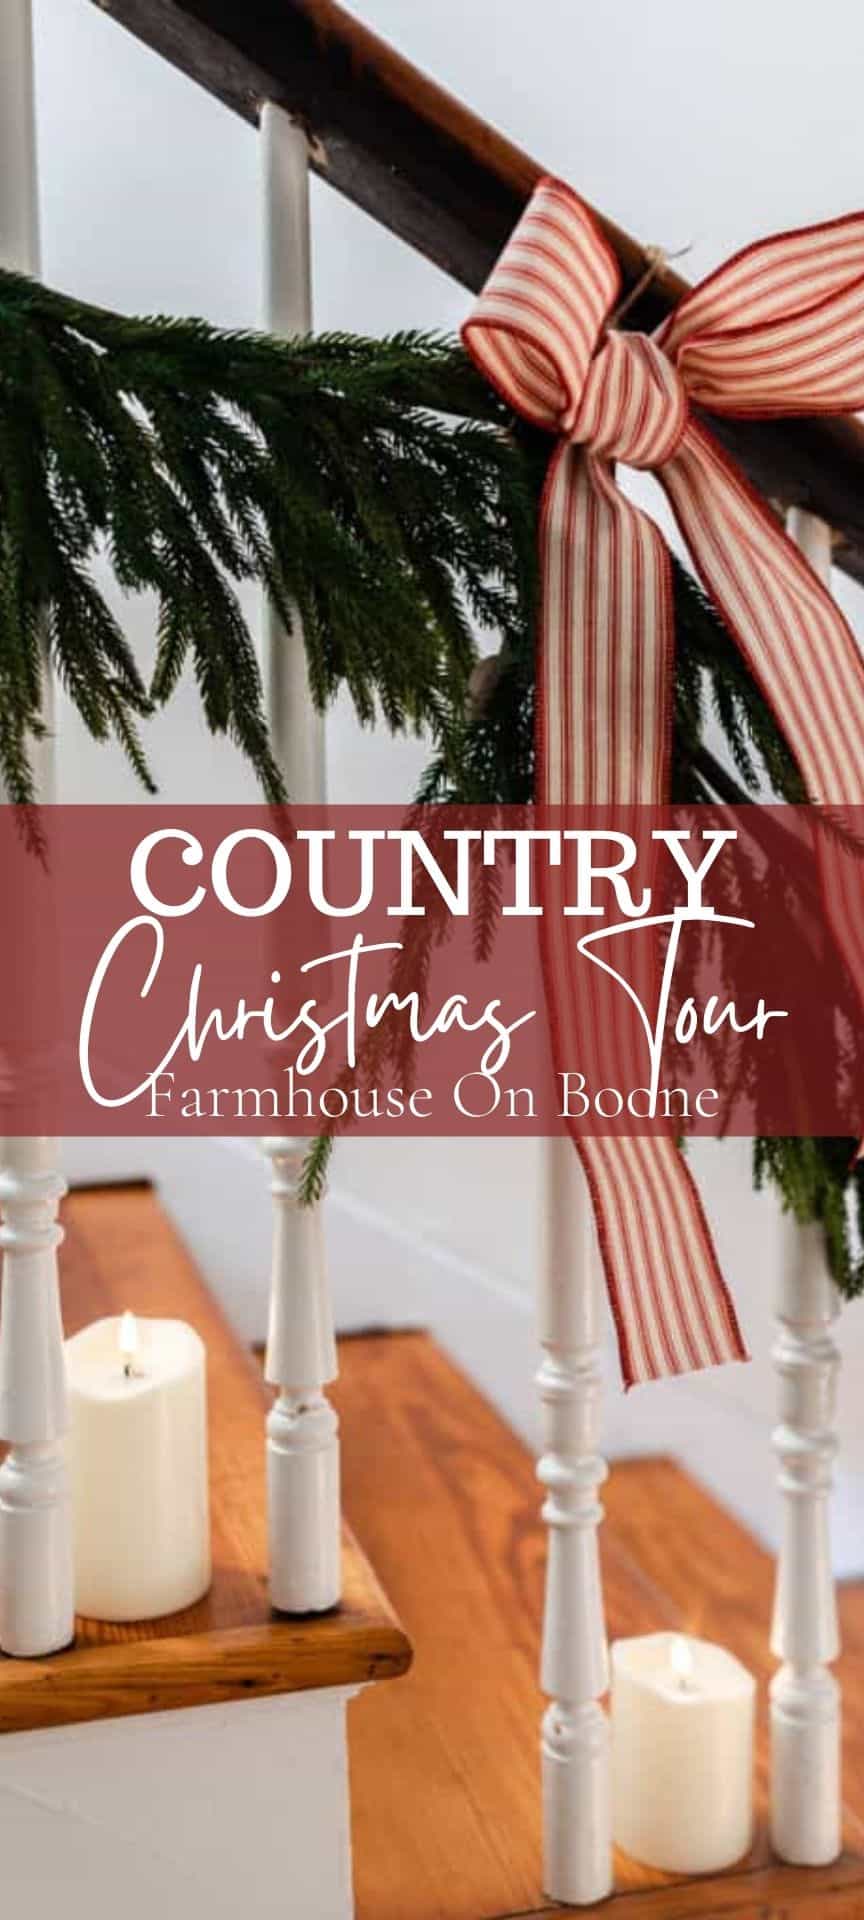 Country Christmas Home Tour - Farmhouse on Boone